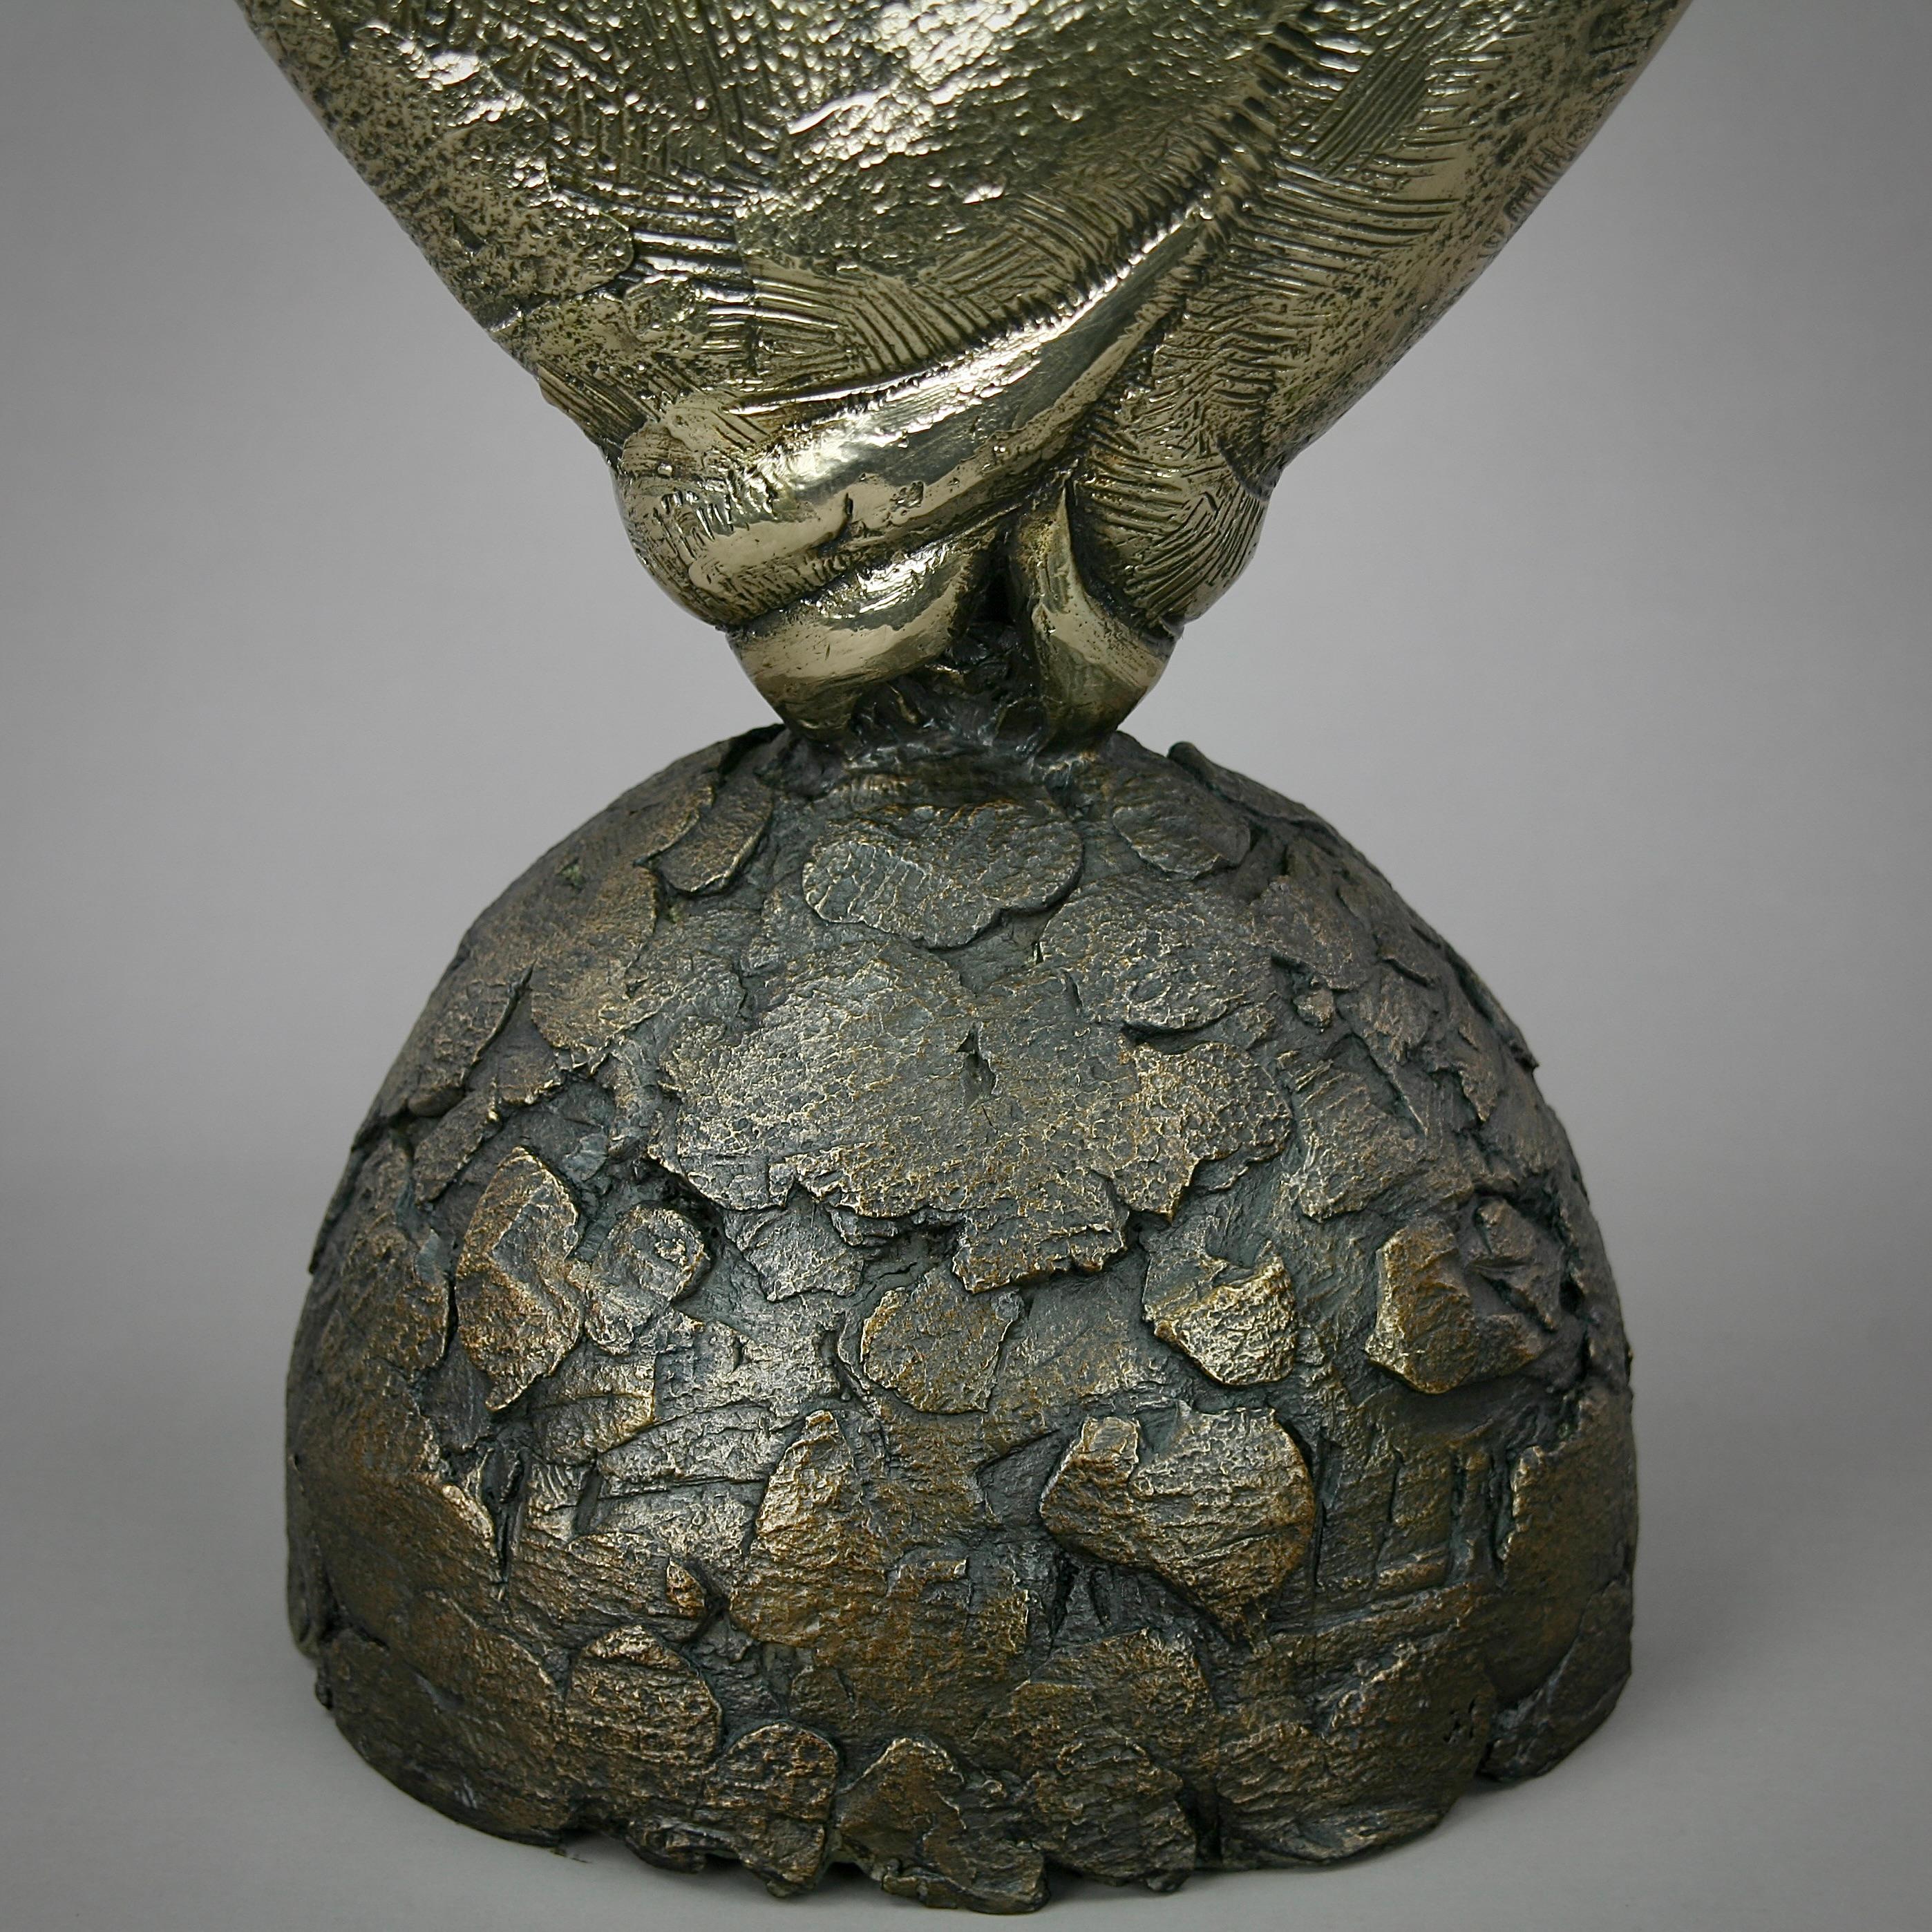 Titan Triggerfish -original bronze marine wildlife sculpture - contemporary Art - Gold Figurative Sculpture by Andrzej Szymczyk